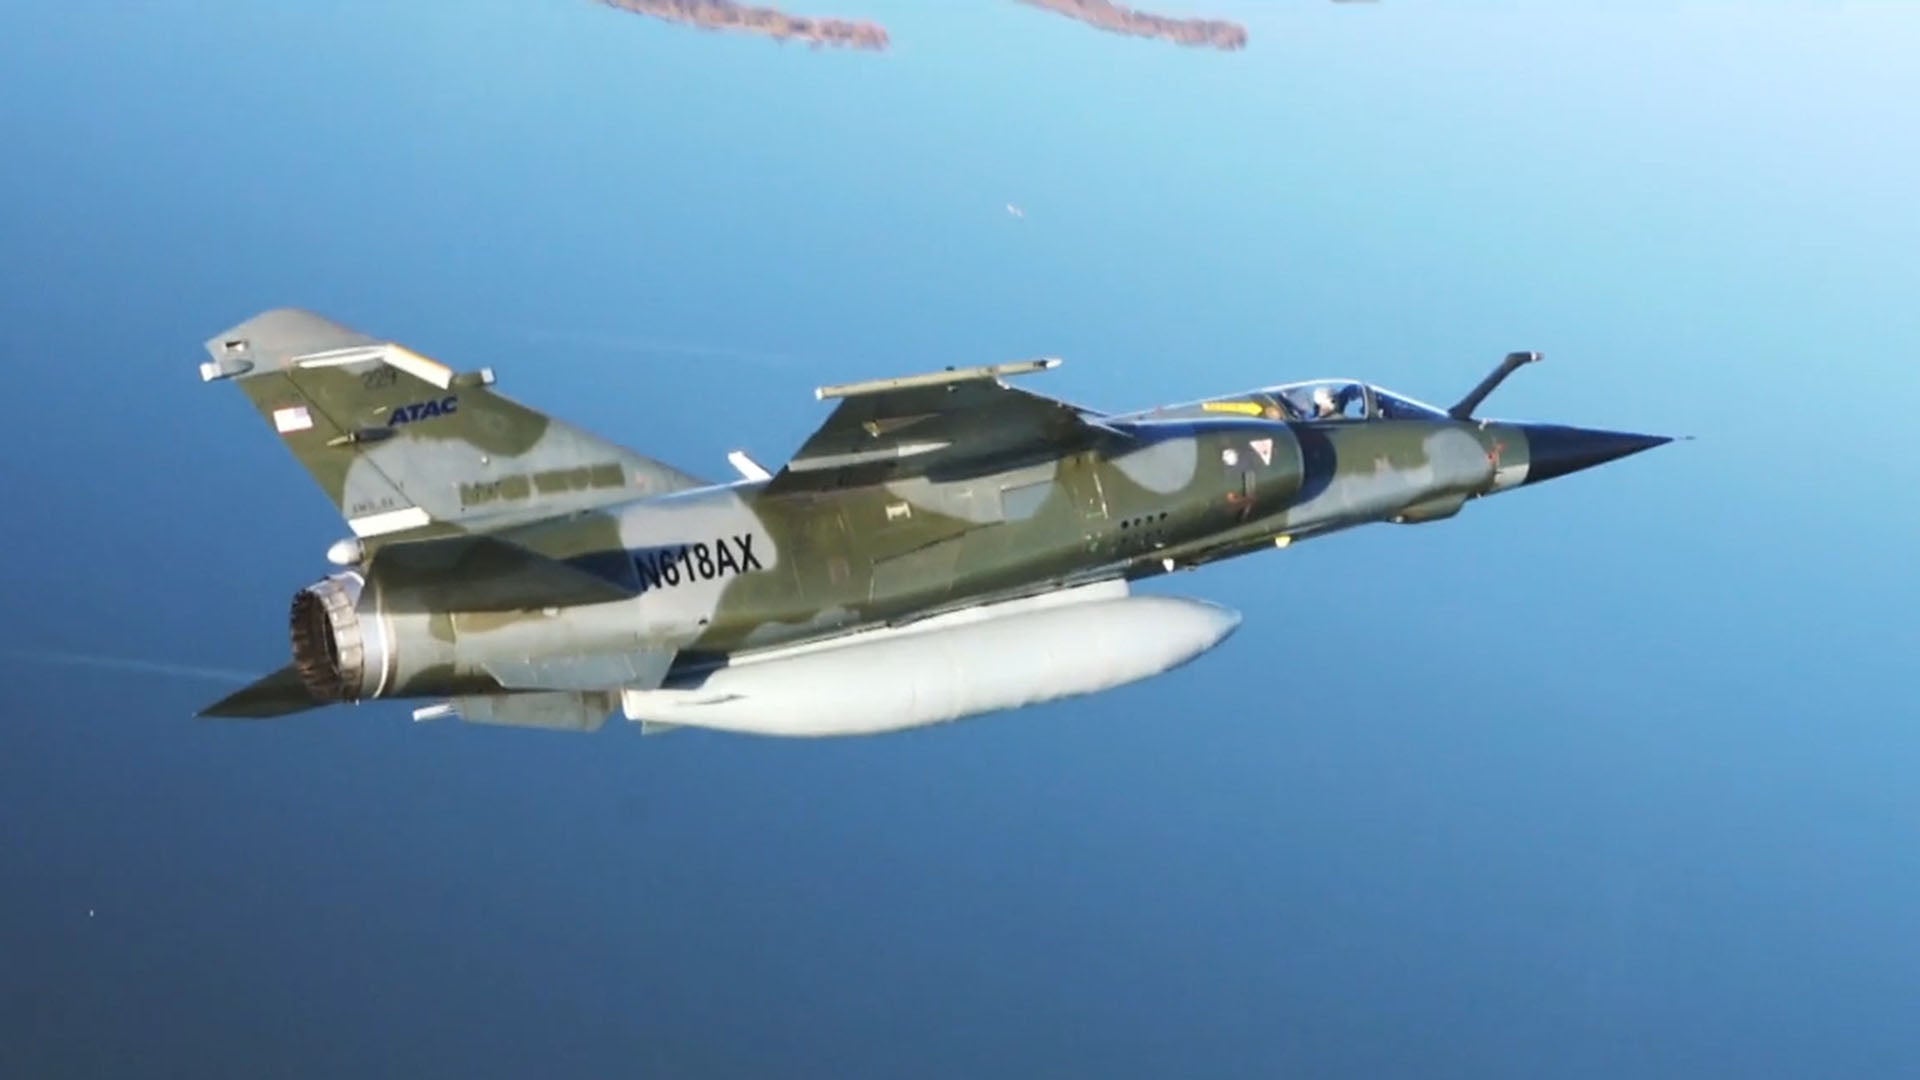 Dassault Mirage F1 Wallpapers